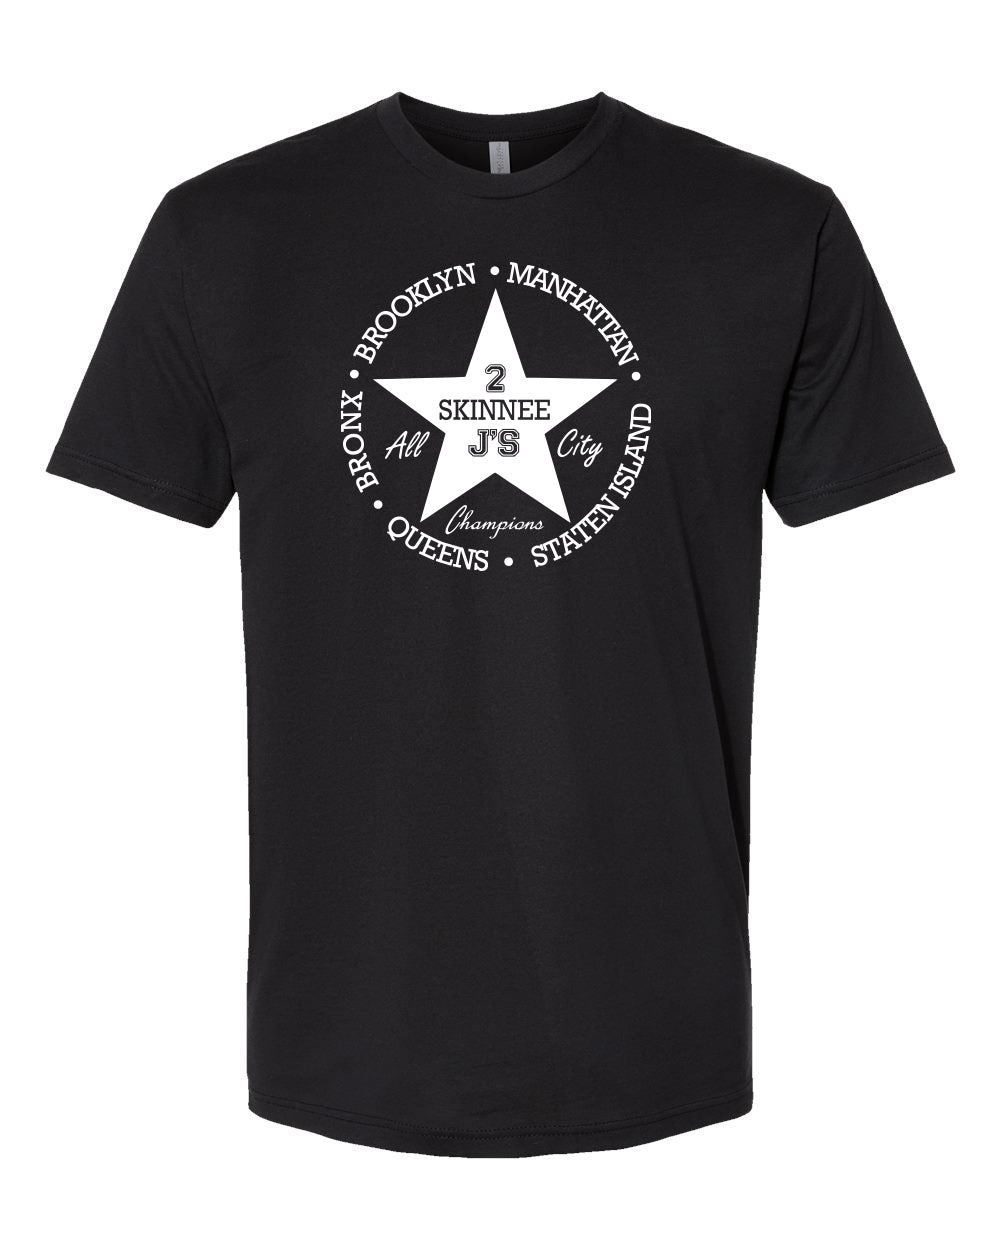 2 Skinnee J's All-City Champions T-Shirt (Black T-Shirt, White Ink)